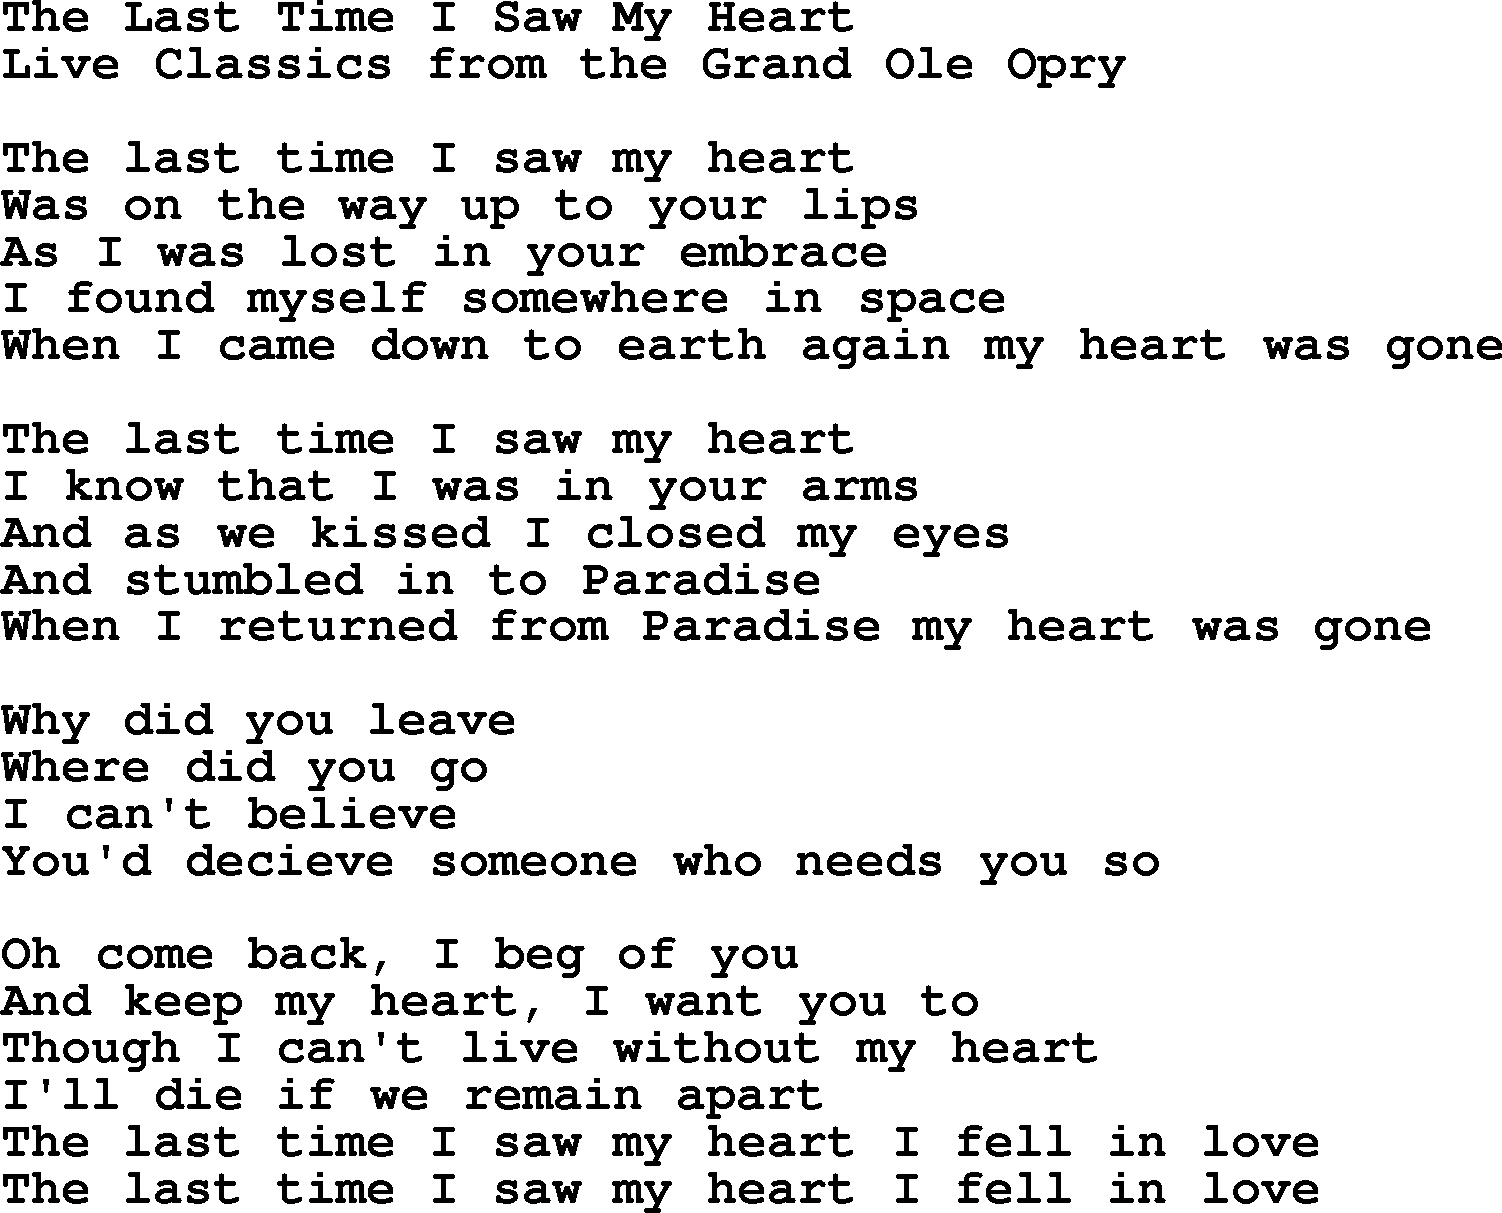 Marty Robbins song: The Last Time I Saw My Heart, lyrics